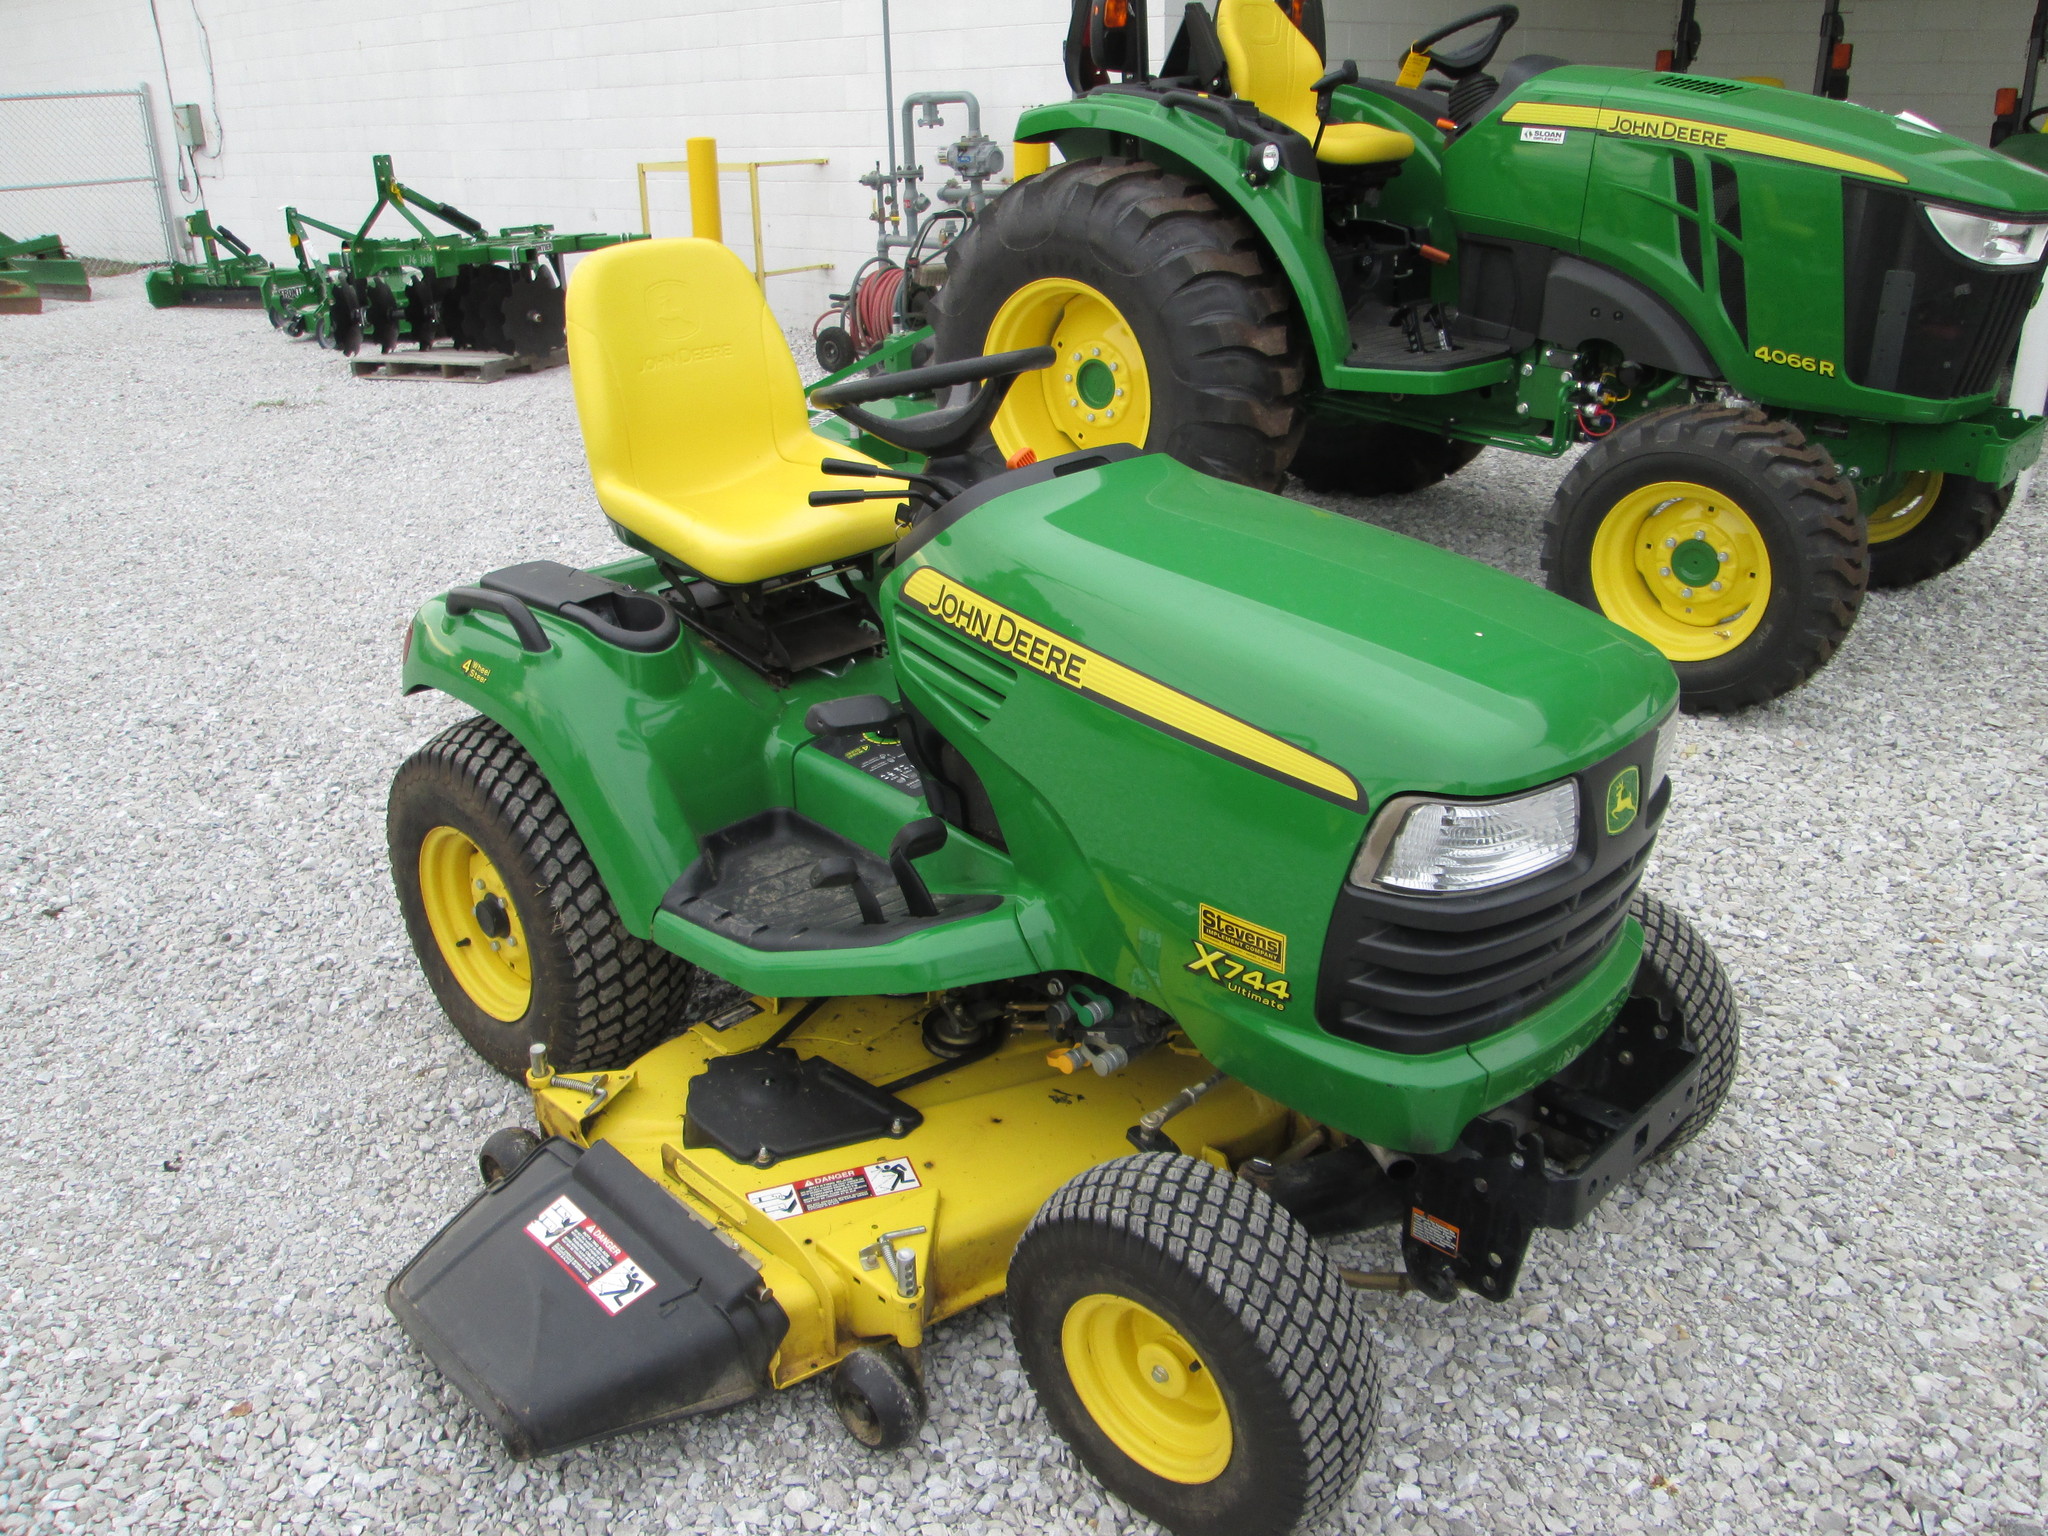 Used Lawn Equipment, Mowers Tractors - Minnesota Equipment